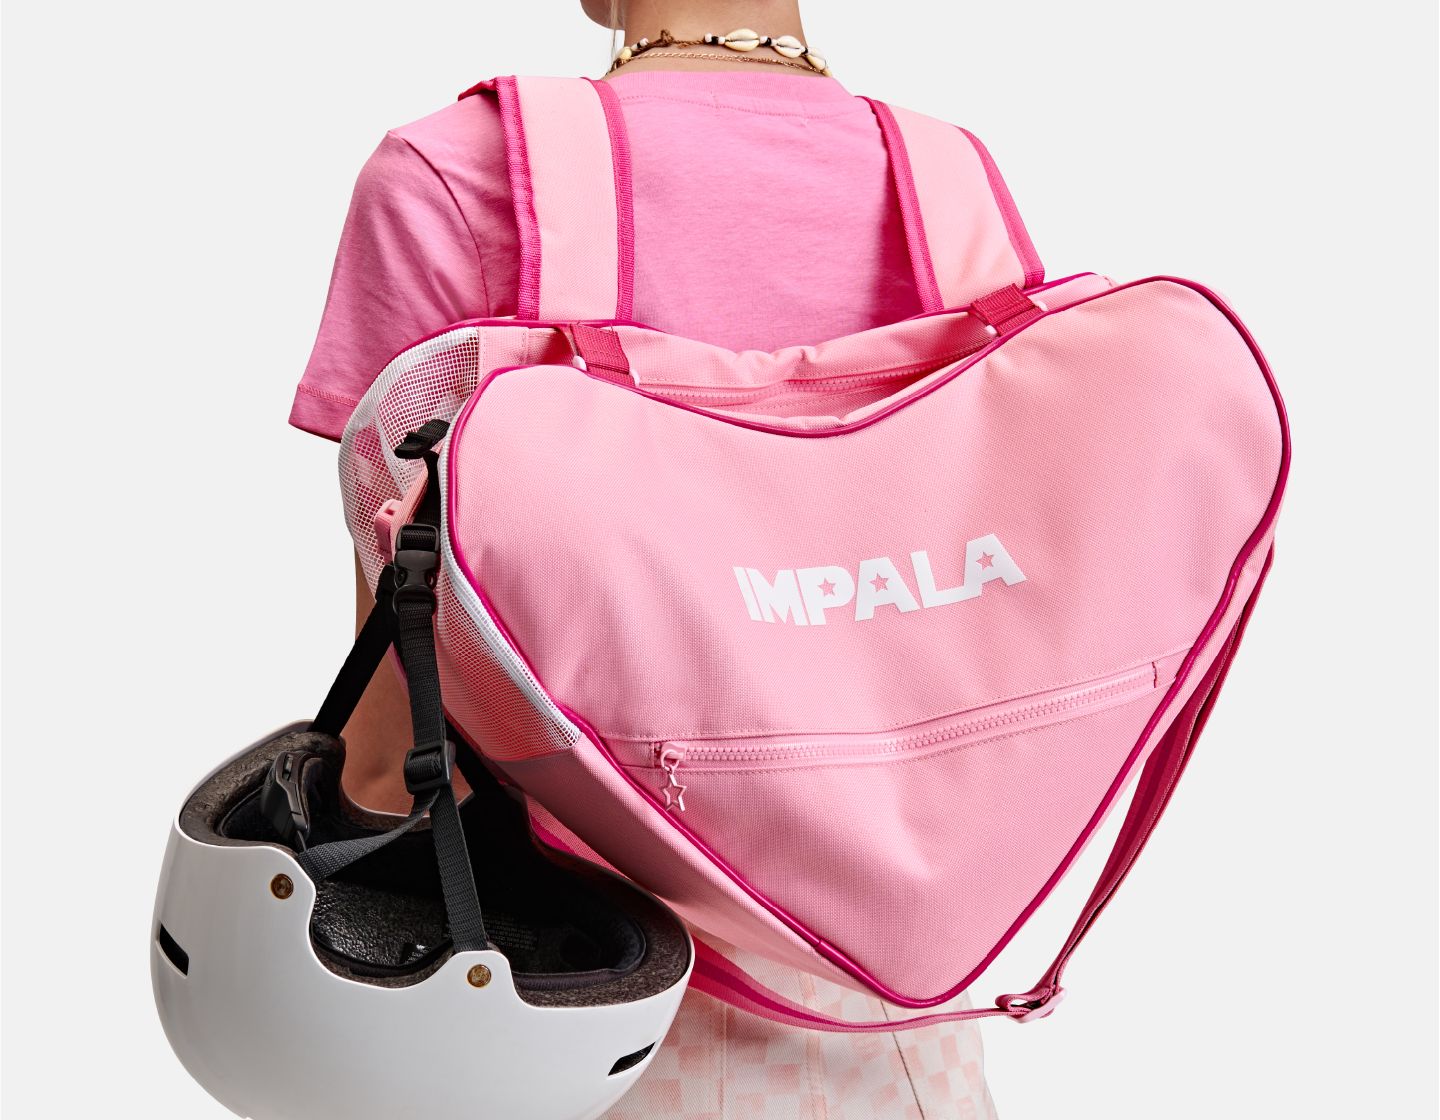 Victoria Secret Travel Tote Bag Pink And Black Stripe $99